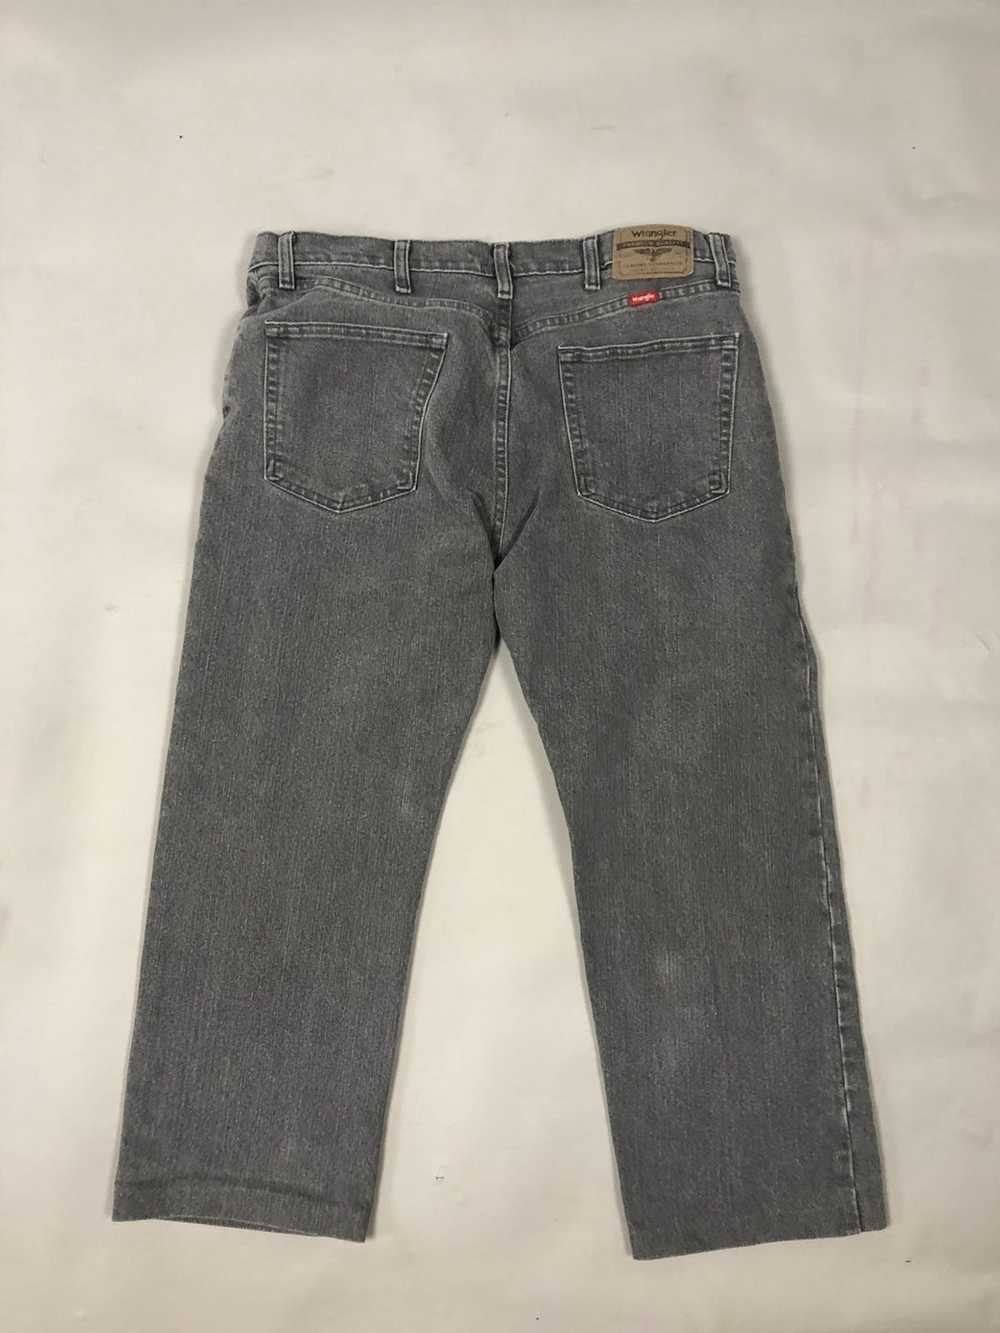 Wrangler Wrangler Premium Quality Jeans - image 4